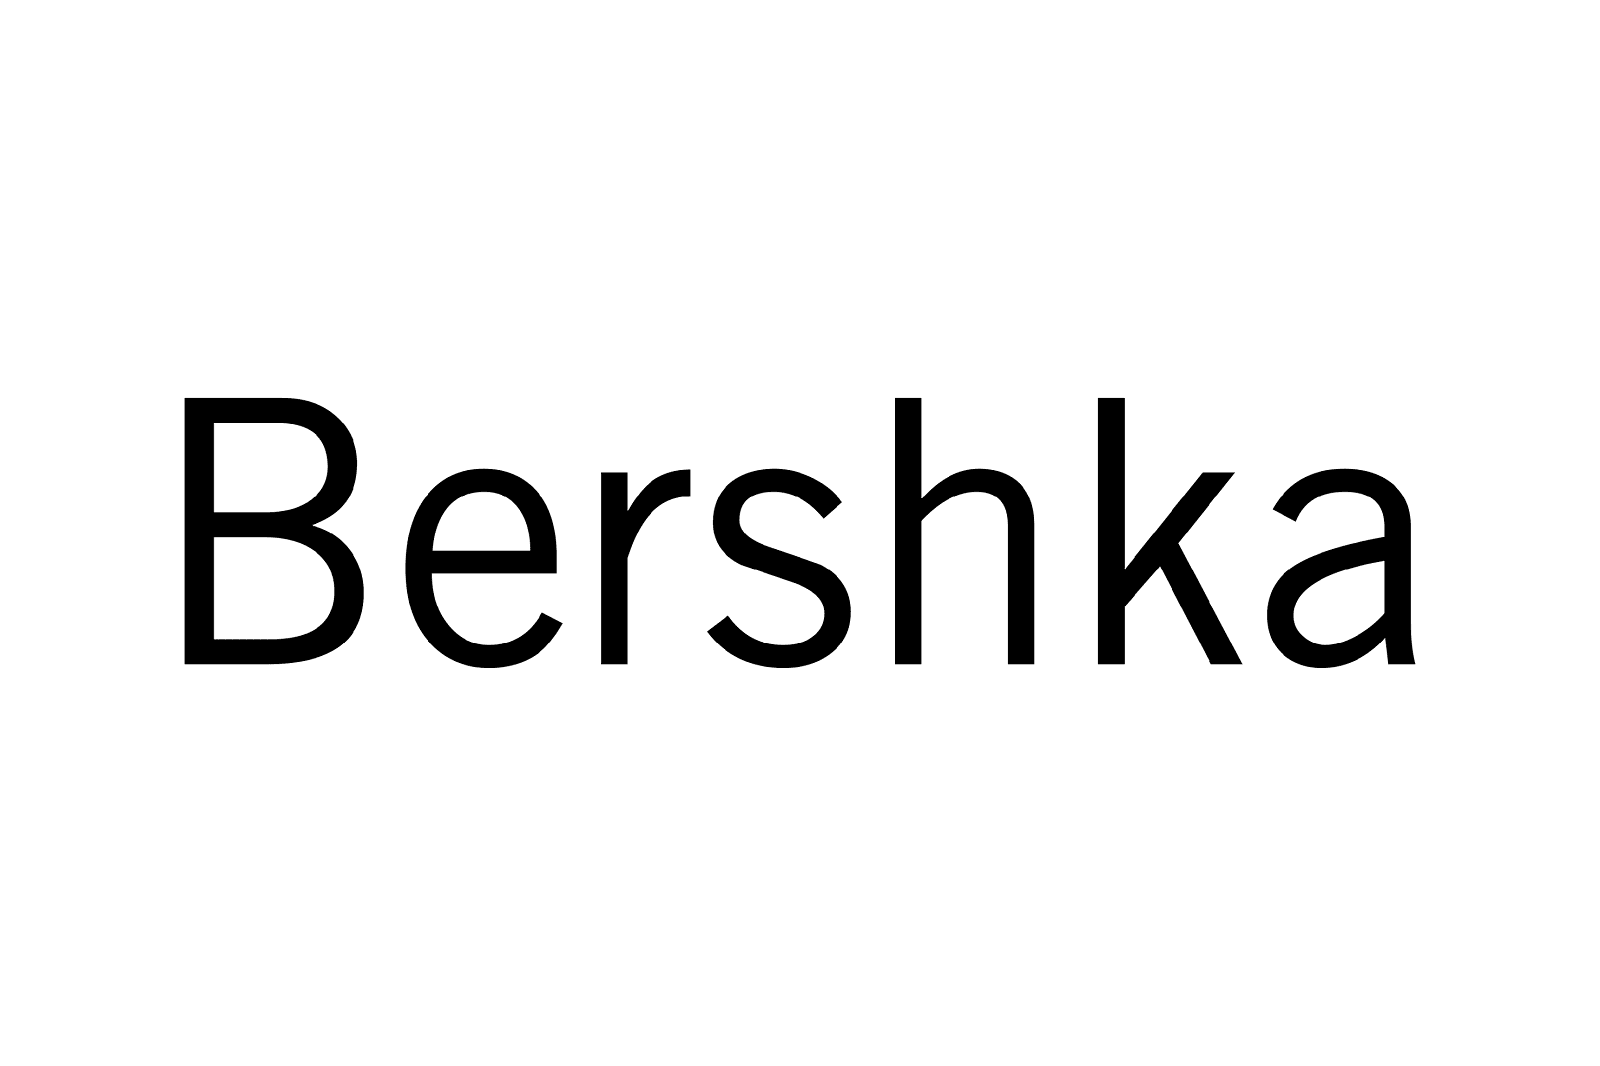 Download Bershka Logo in SVG Vector or PNG File Format - Logo.wine